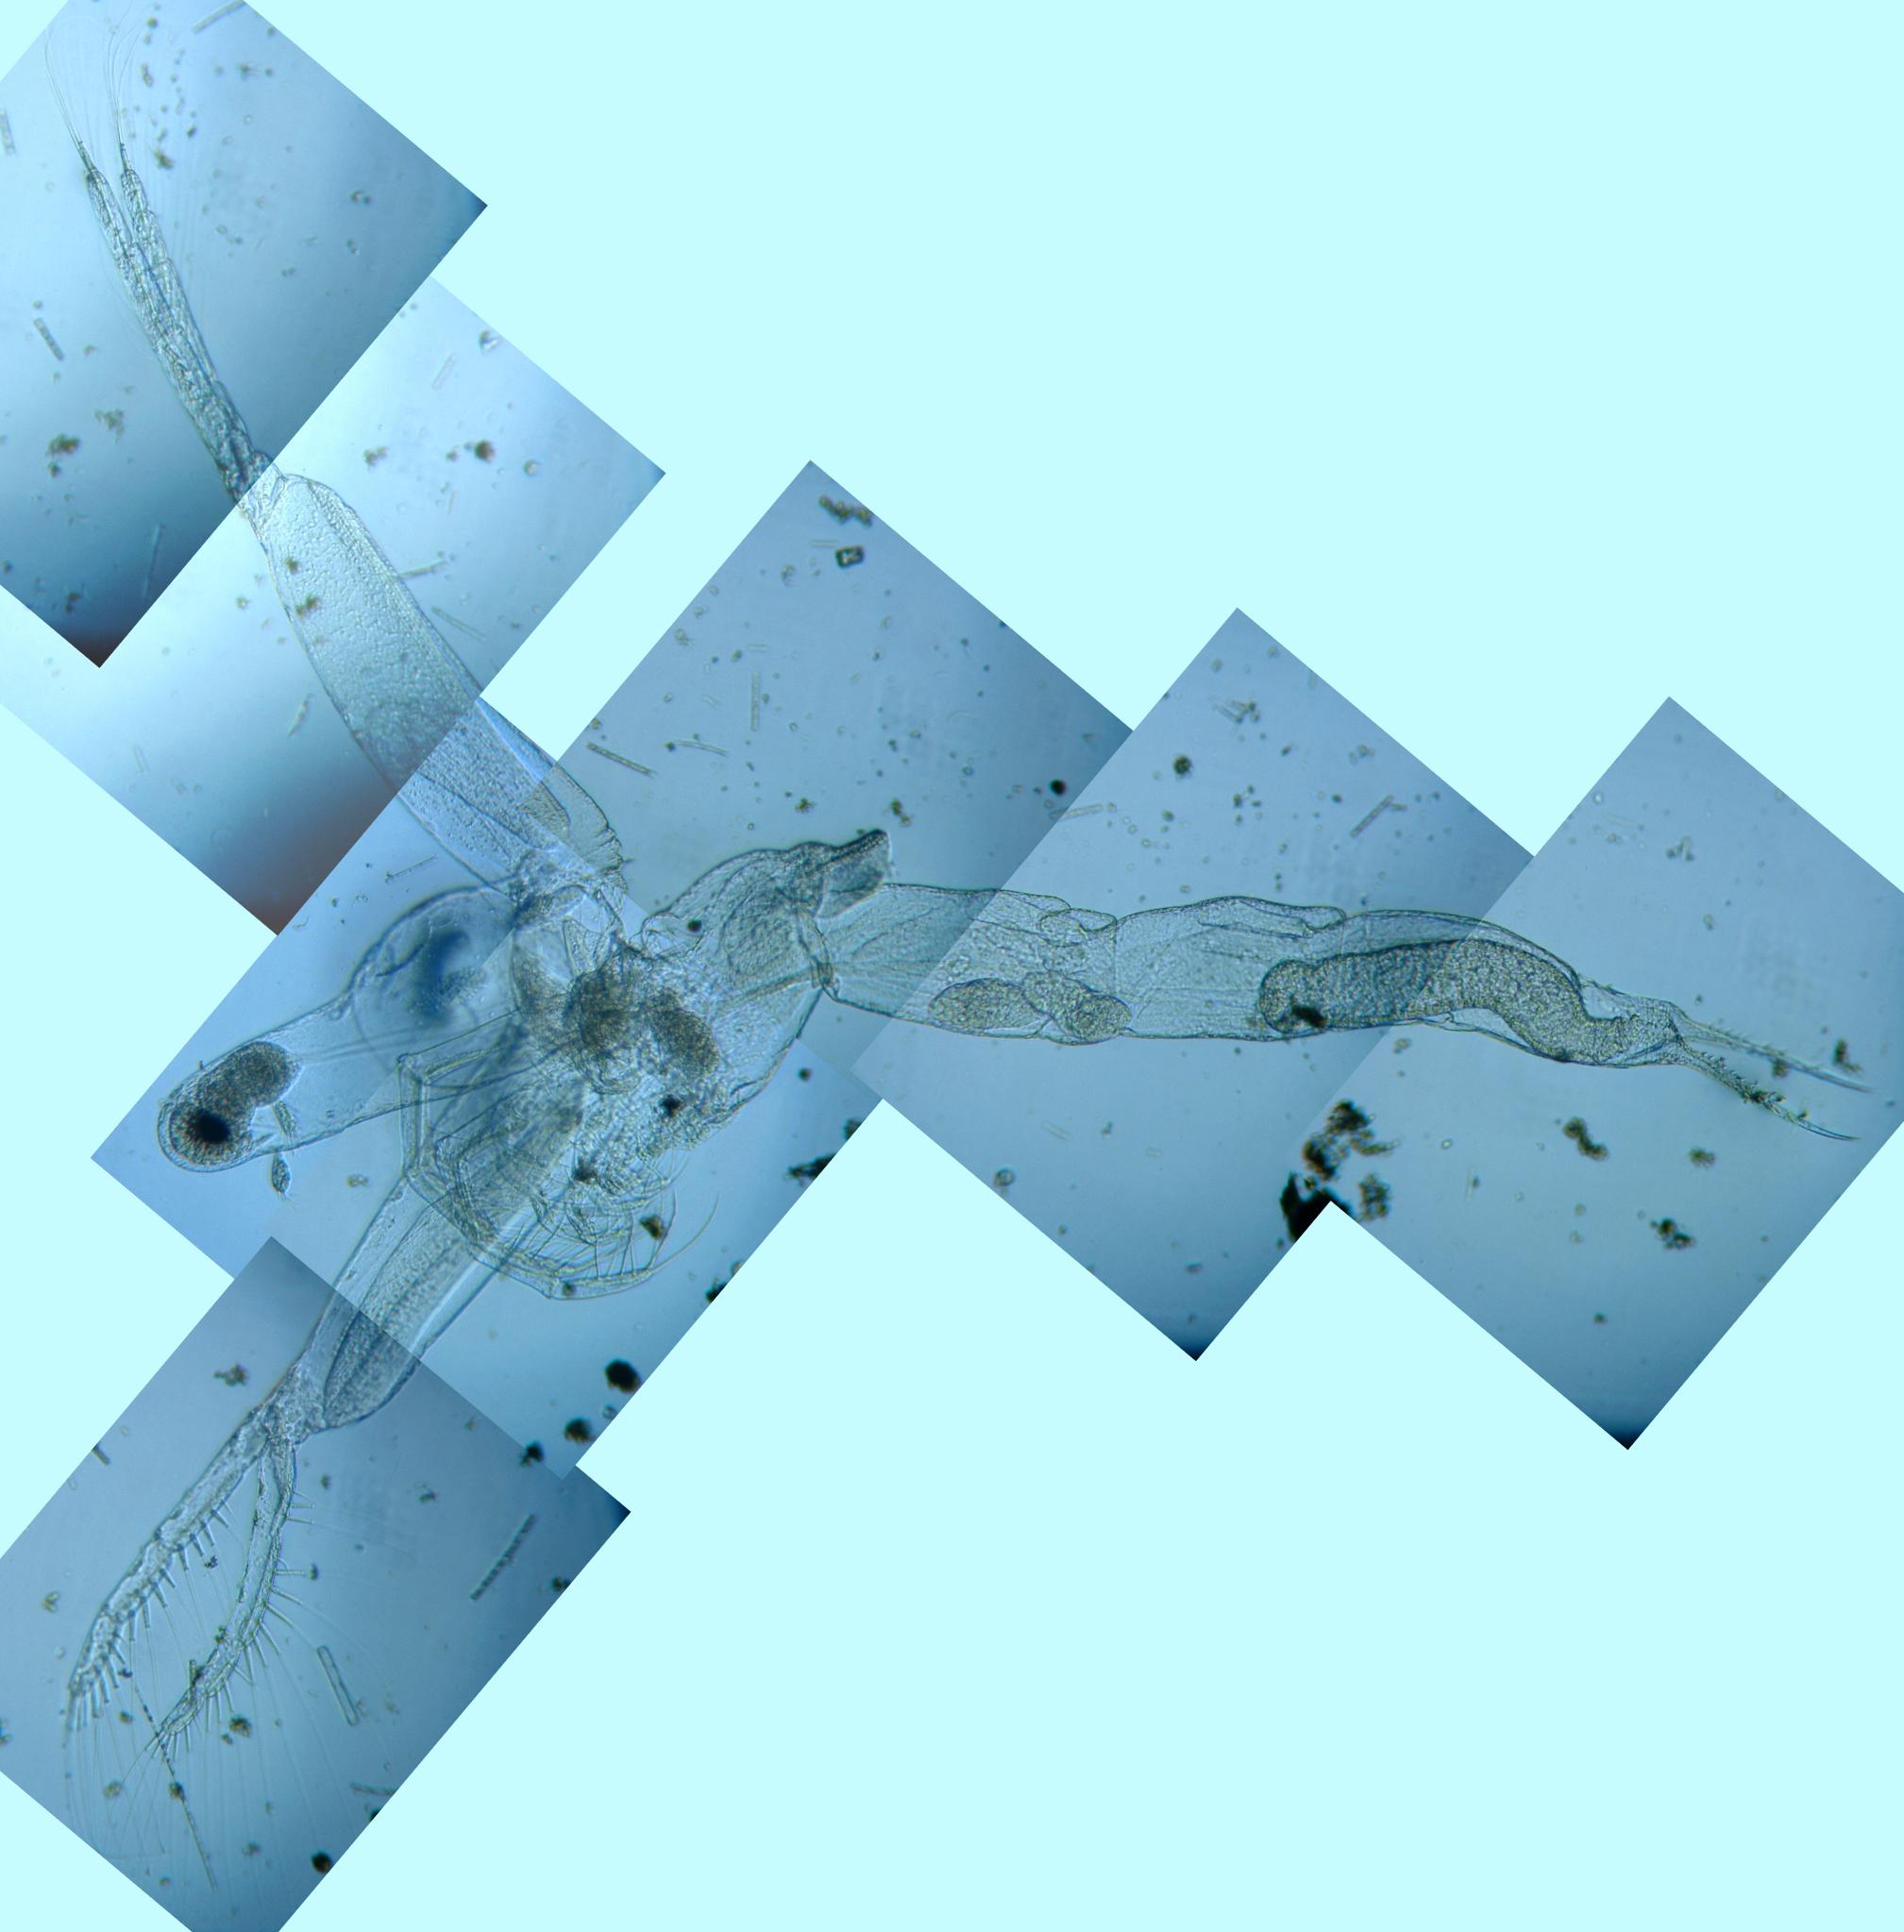 fig.02 ṽmÊP
Leptodora kindtii